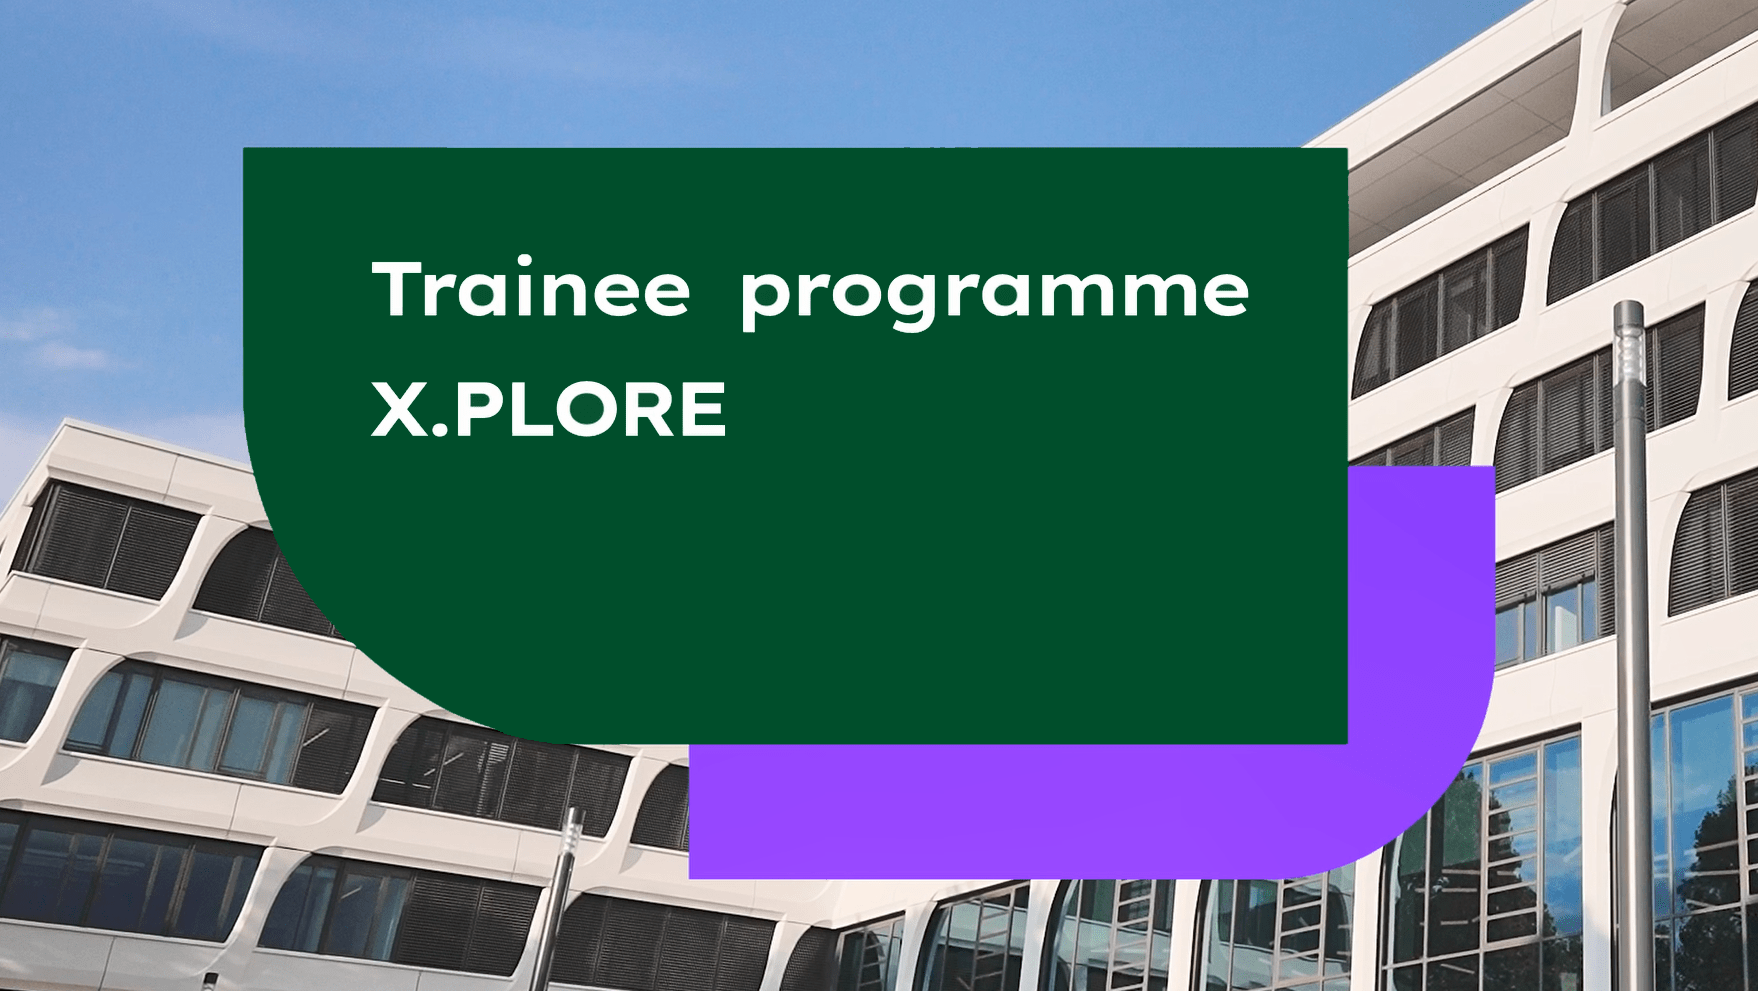 Trainee programme X.PLORE